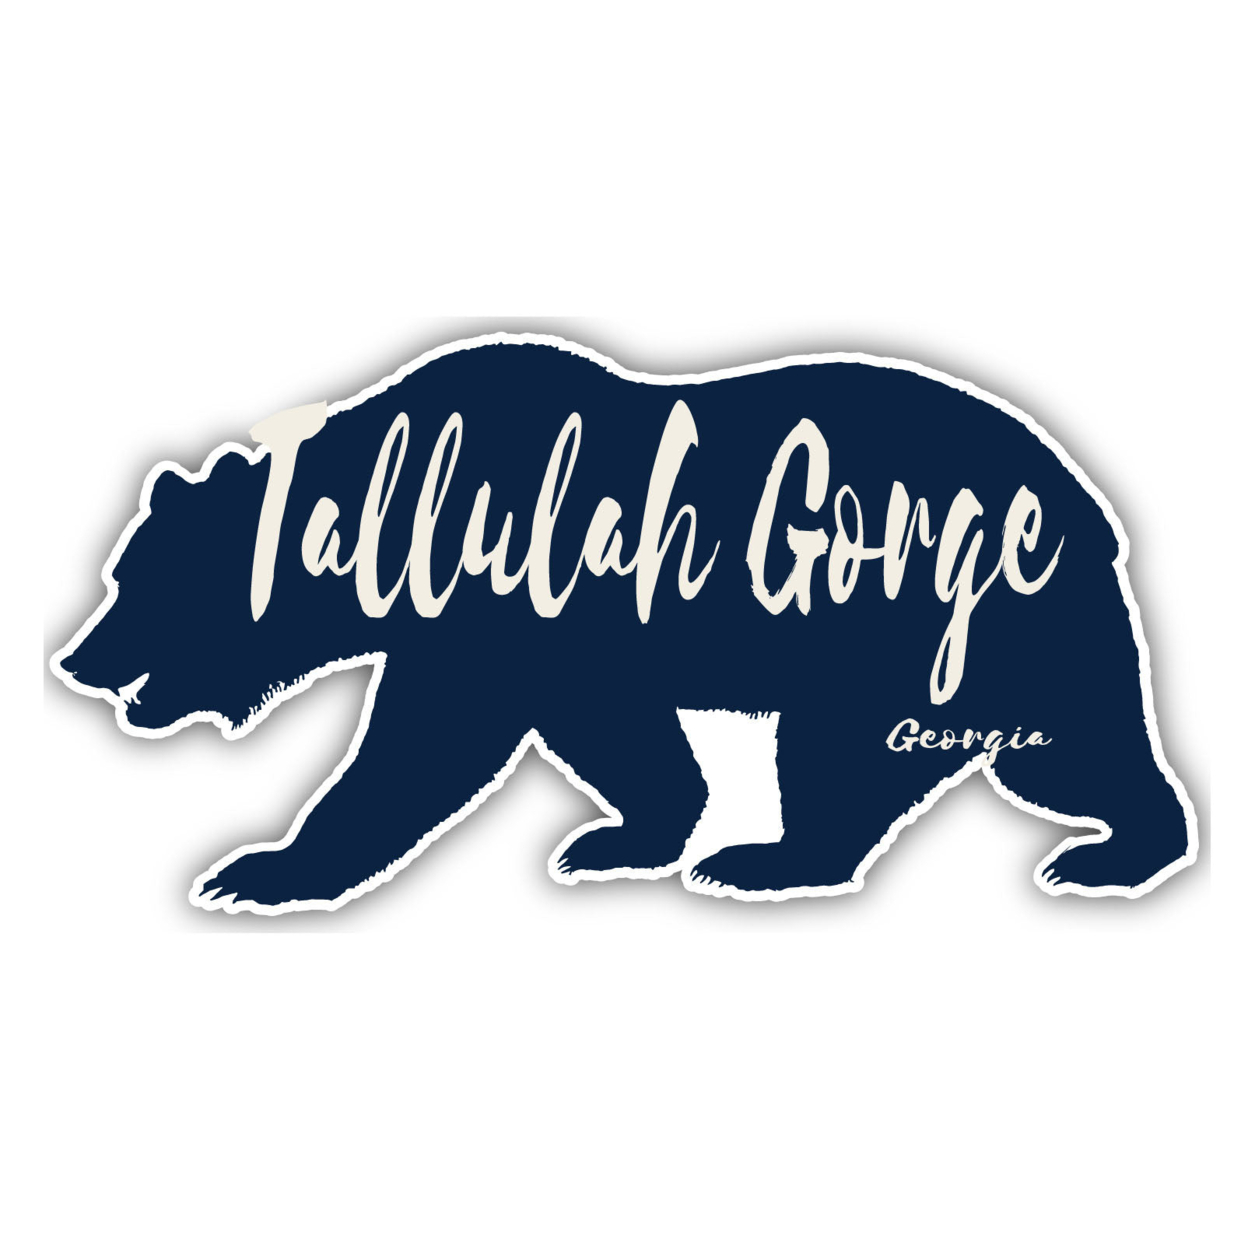 Tallulah Gorge Georgia Souvenir Decorative Stickers (Choose Theme And Size) - Single Unit, 2-Inch, Tent